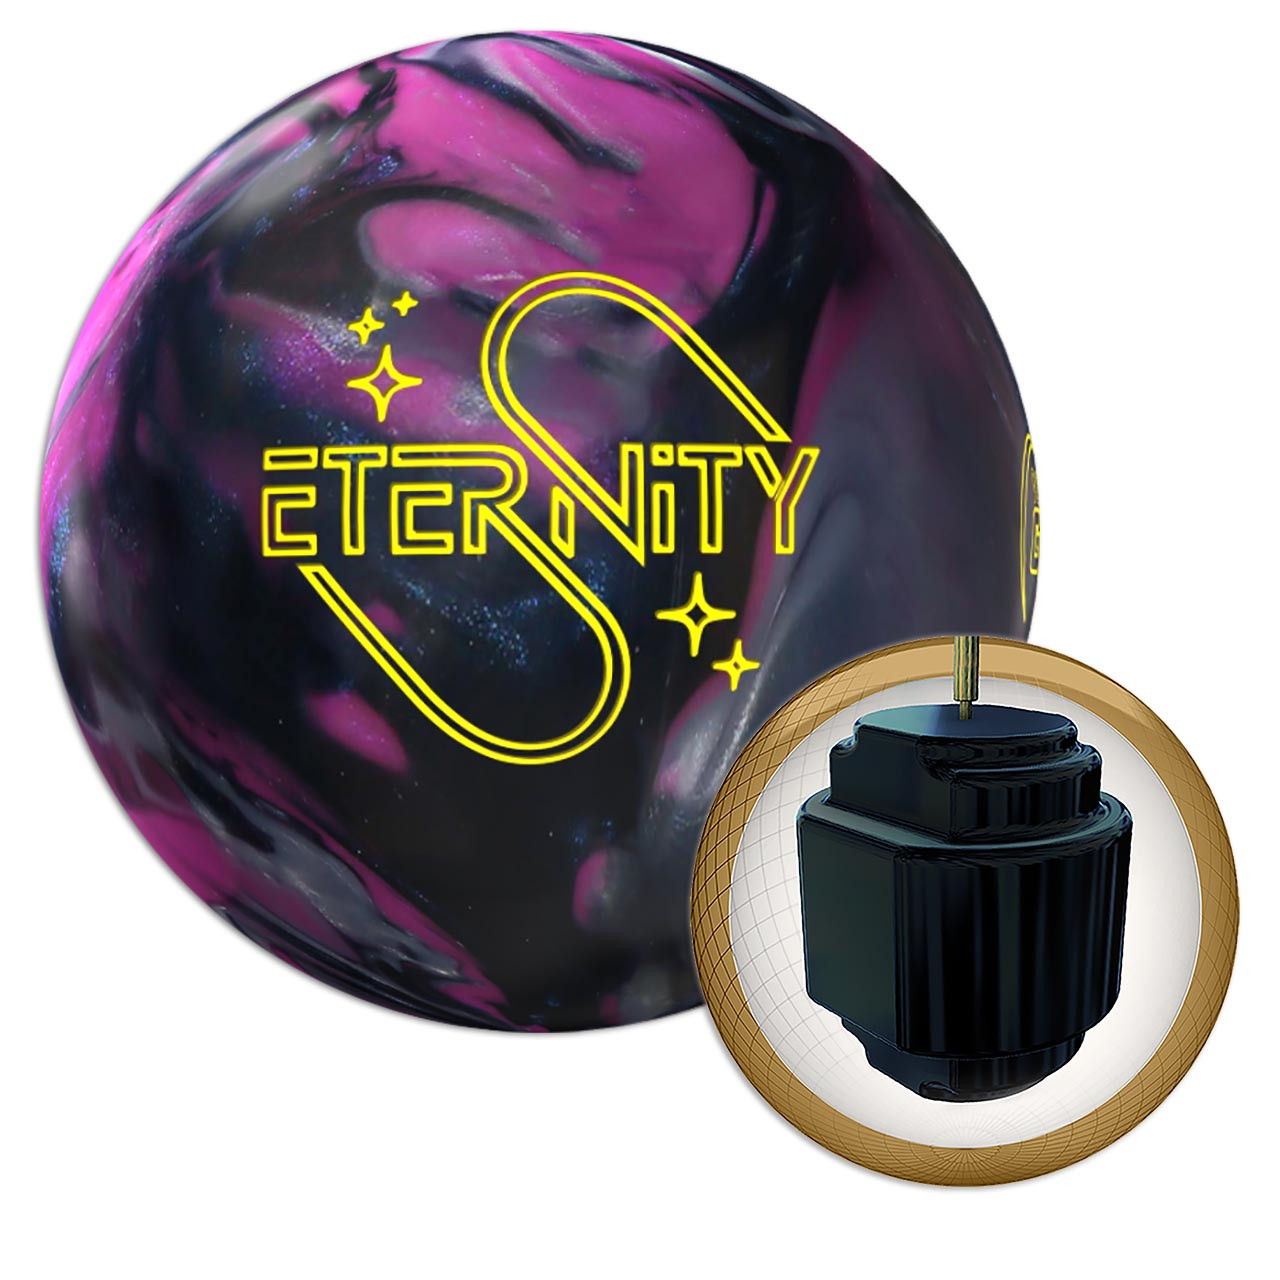 900 Global Eternity Bowling Ball FREE SHIPPING